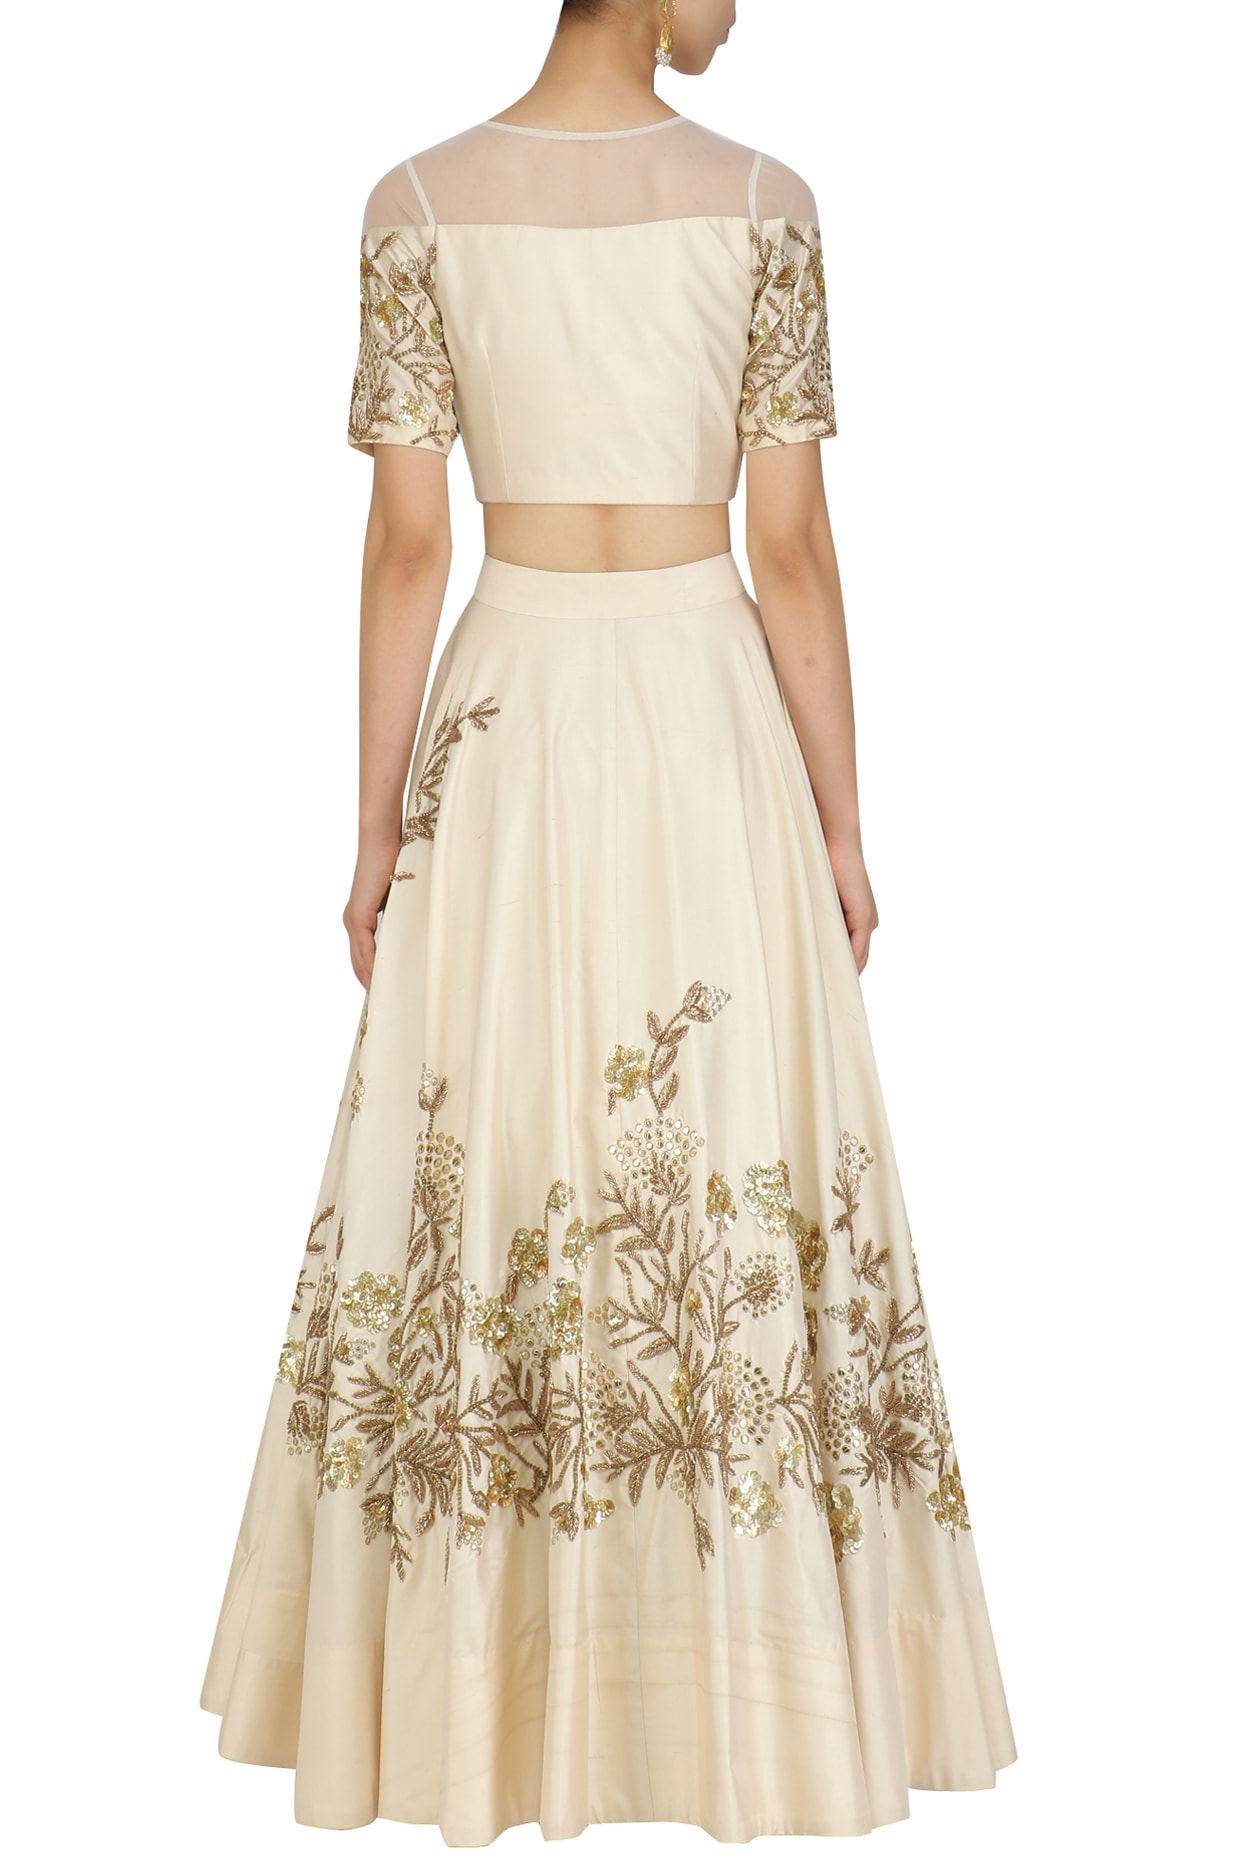 Afternoon Party Wear Indo Western Long Skirt Top Set | Designer Dress